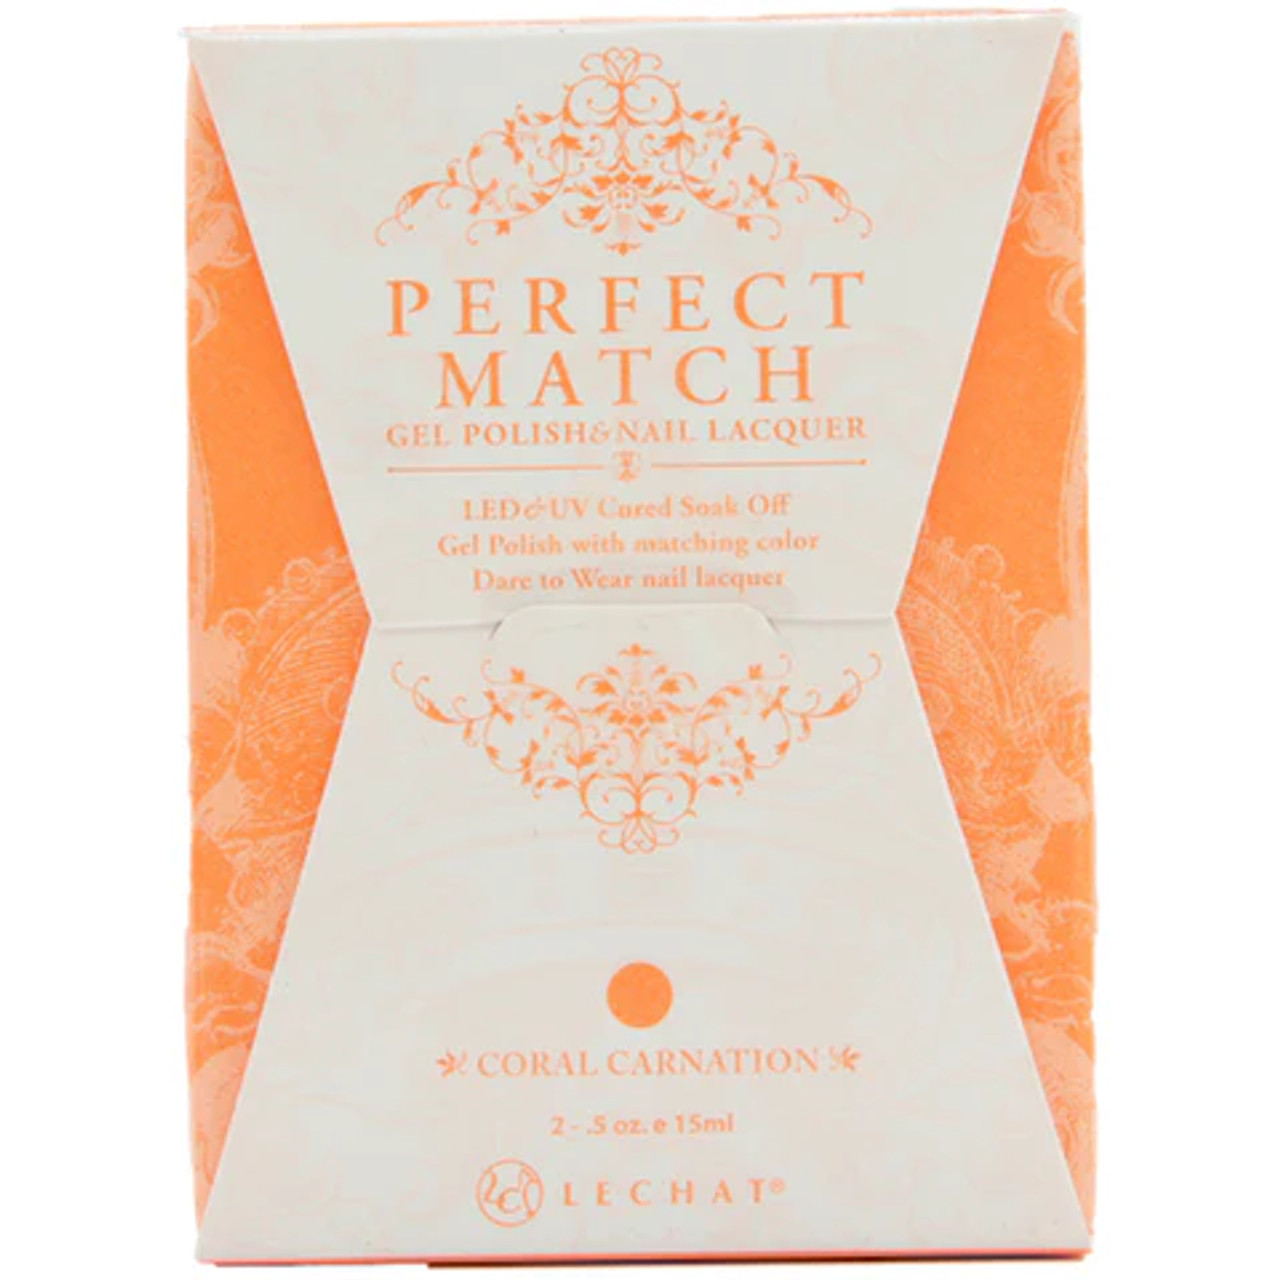 LeChat Perfect Match Gel Polish & Nail Lacquer Coral Carnation - .5oz